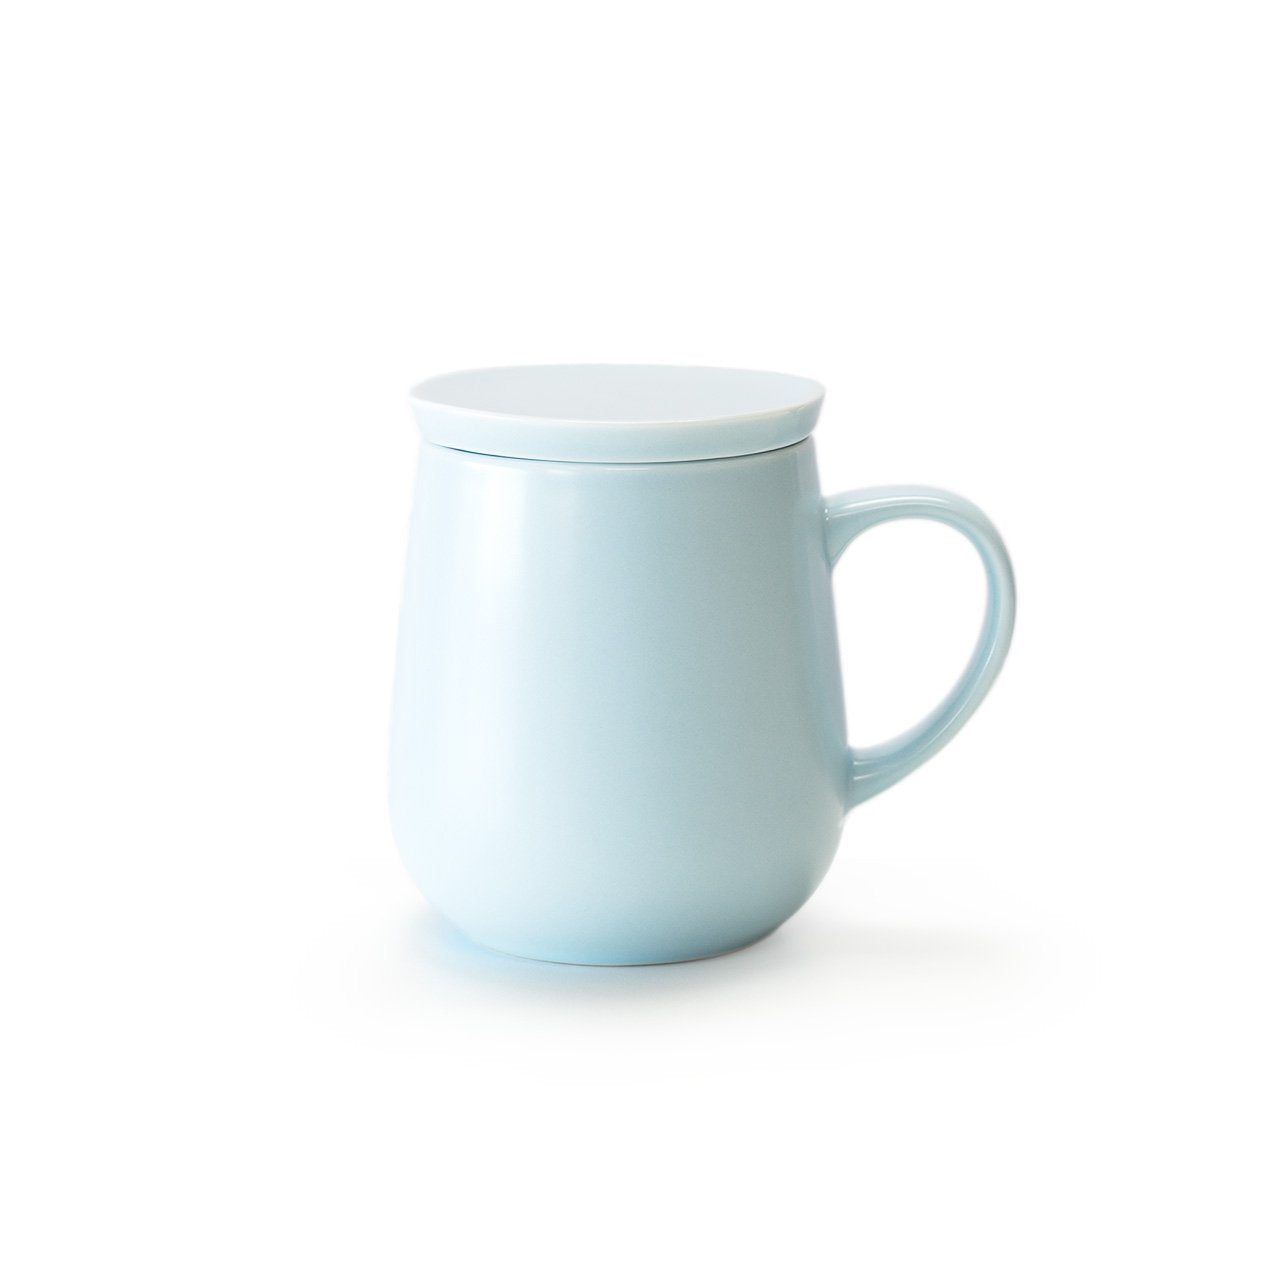 Light blue mug with lid